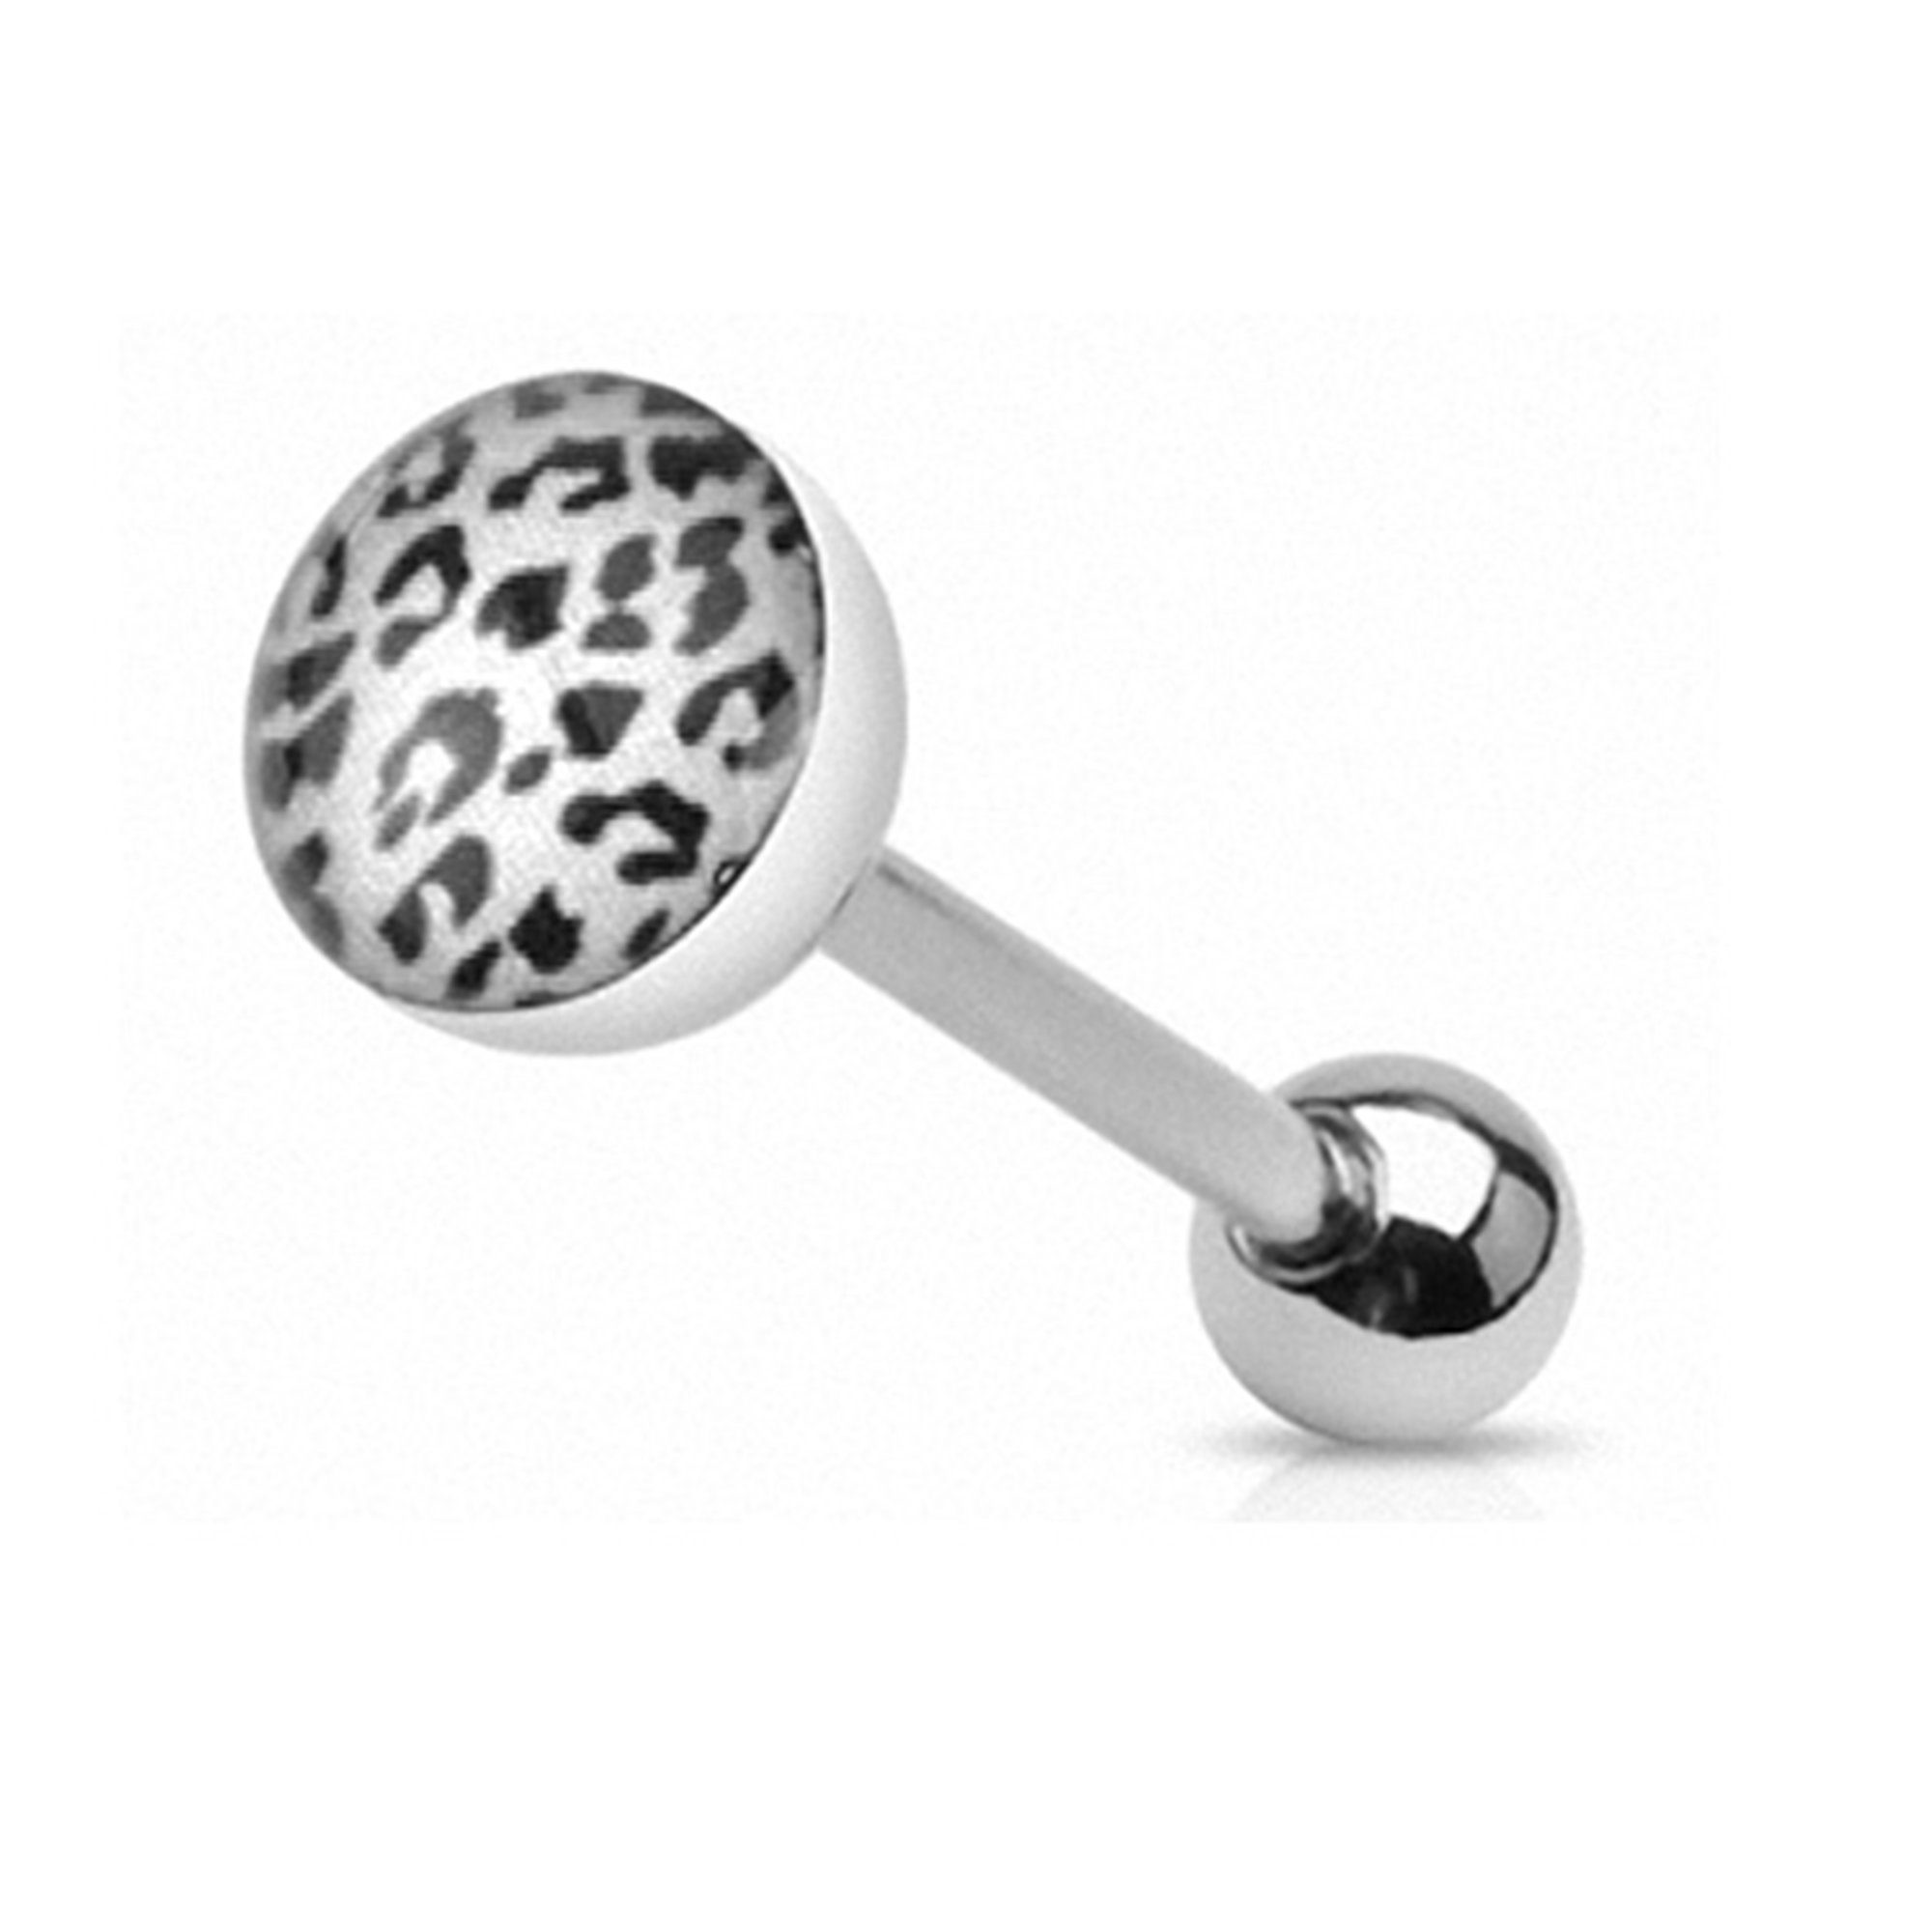 Taffstyle Piercing-Set Zungenpiercing Ohr Kugel Epoxy Leopard Logo Ball, Piercingfaktor Barbell Stab Stecker Intim Brust Oral Ohr Tragus Helix Weiß